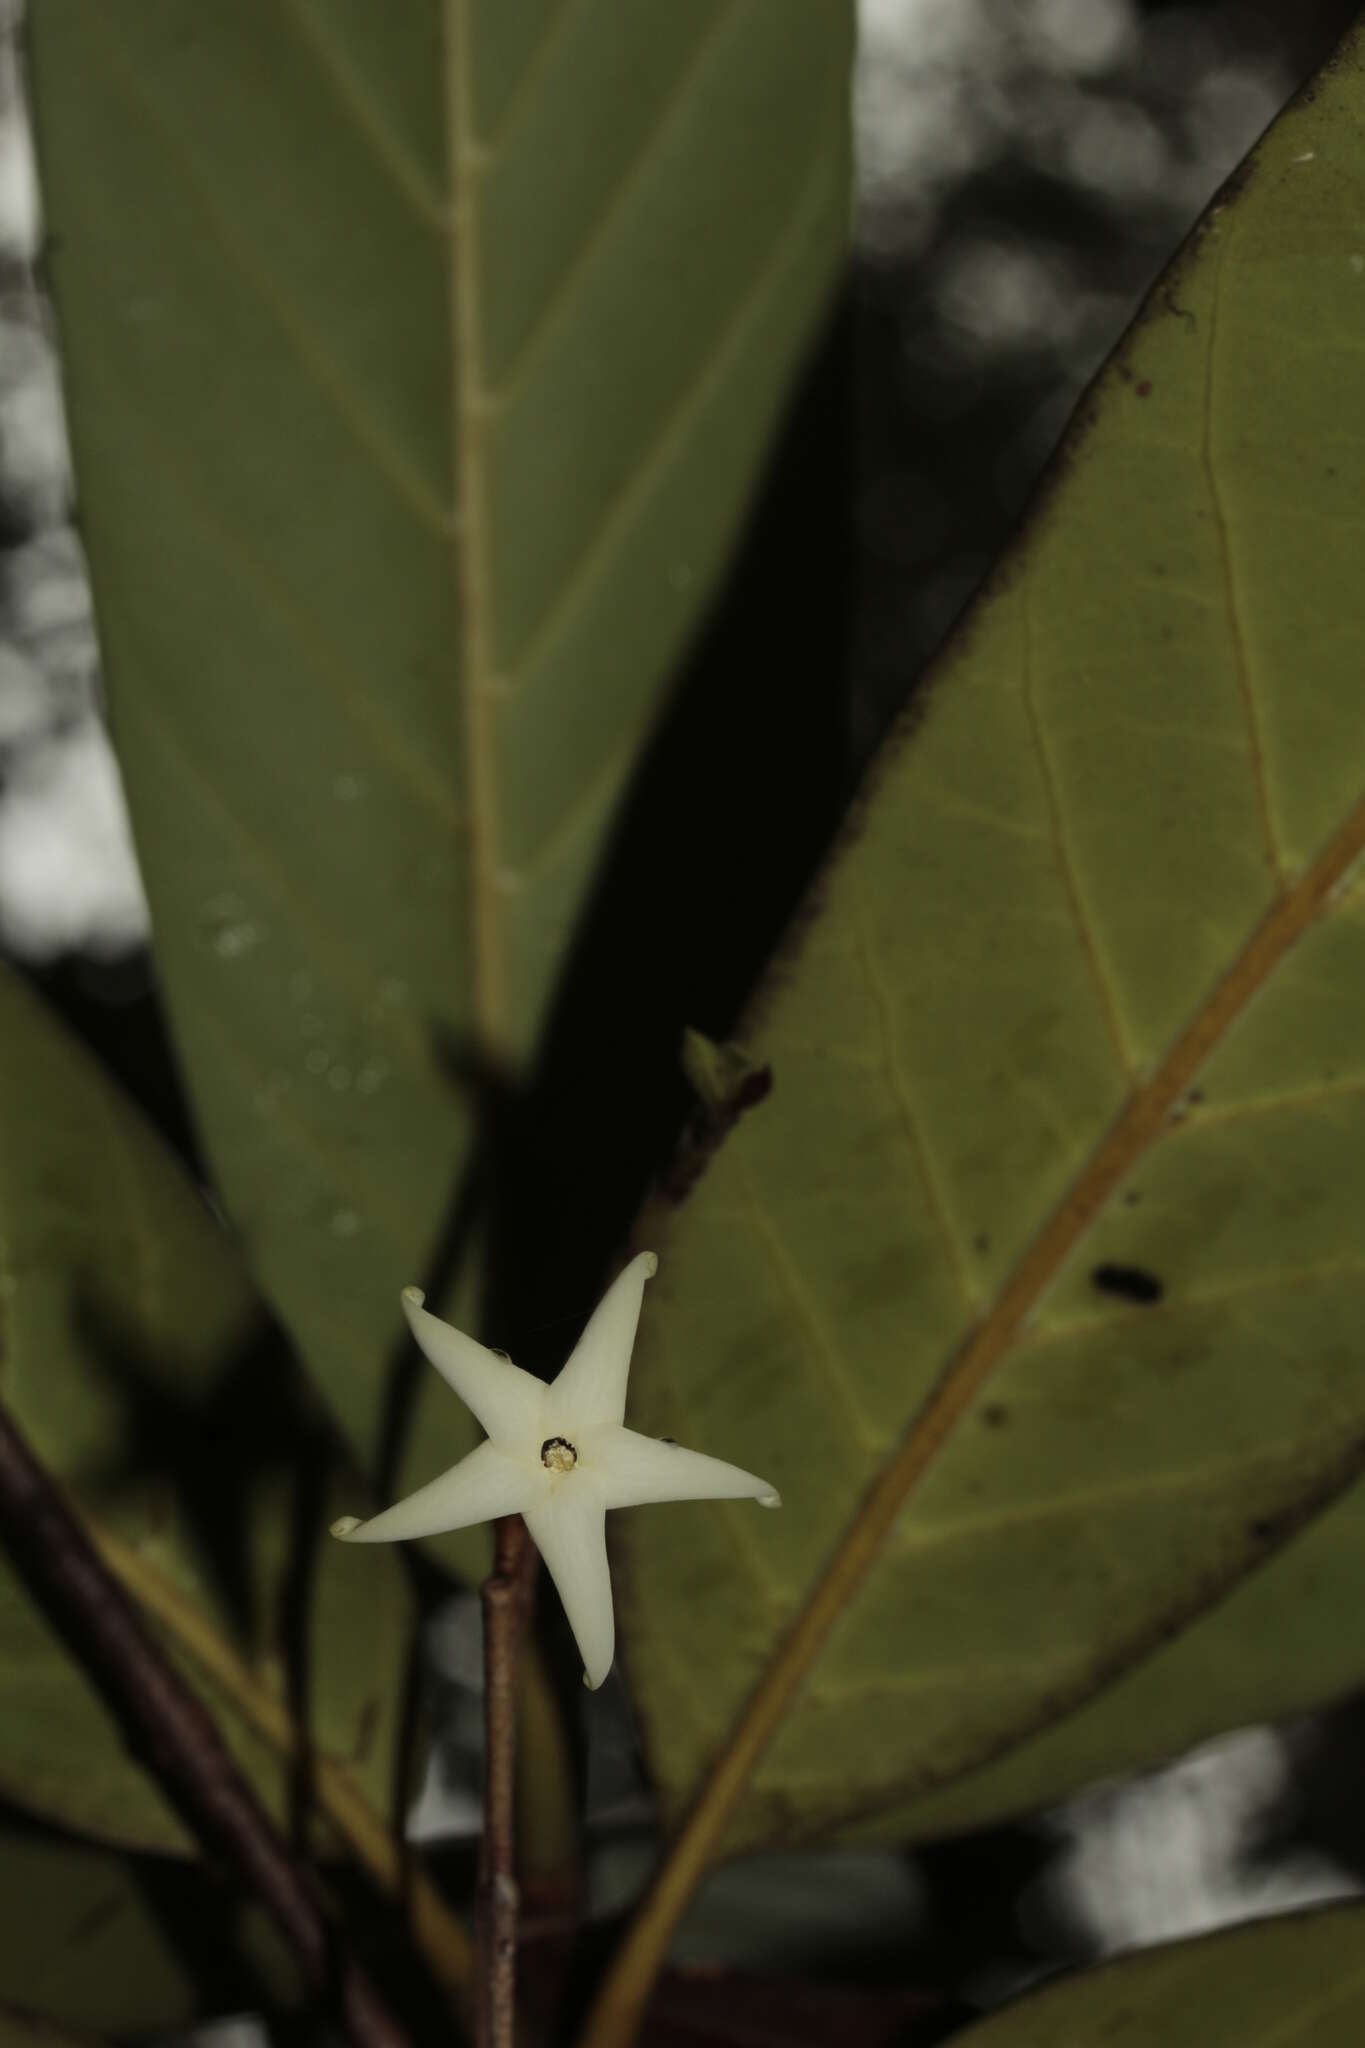 Image of Atractocarpus pterocarpon (Guillaumin) Puttock